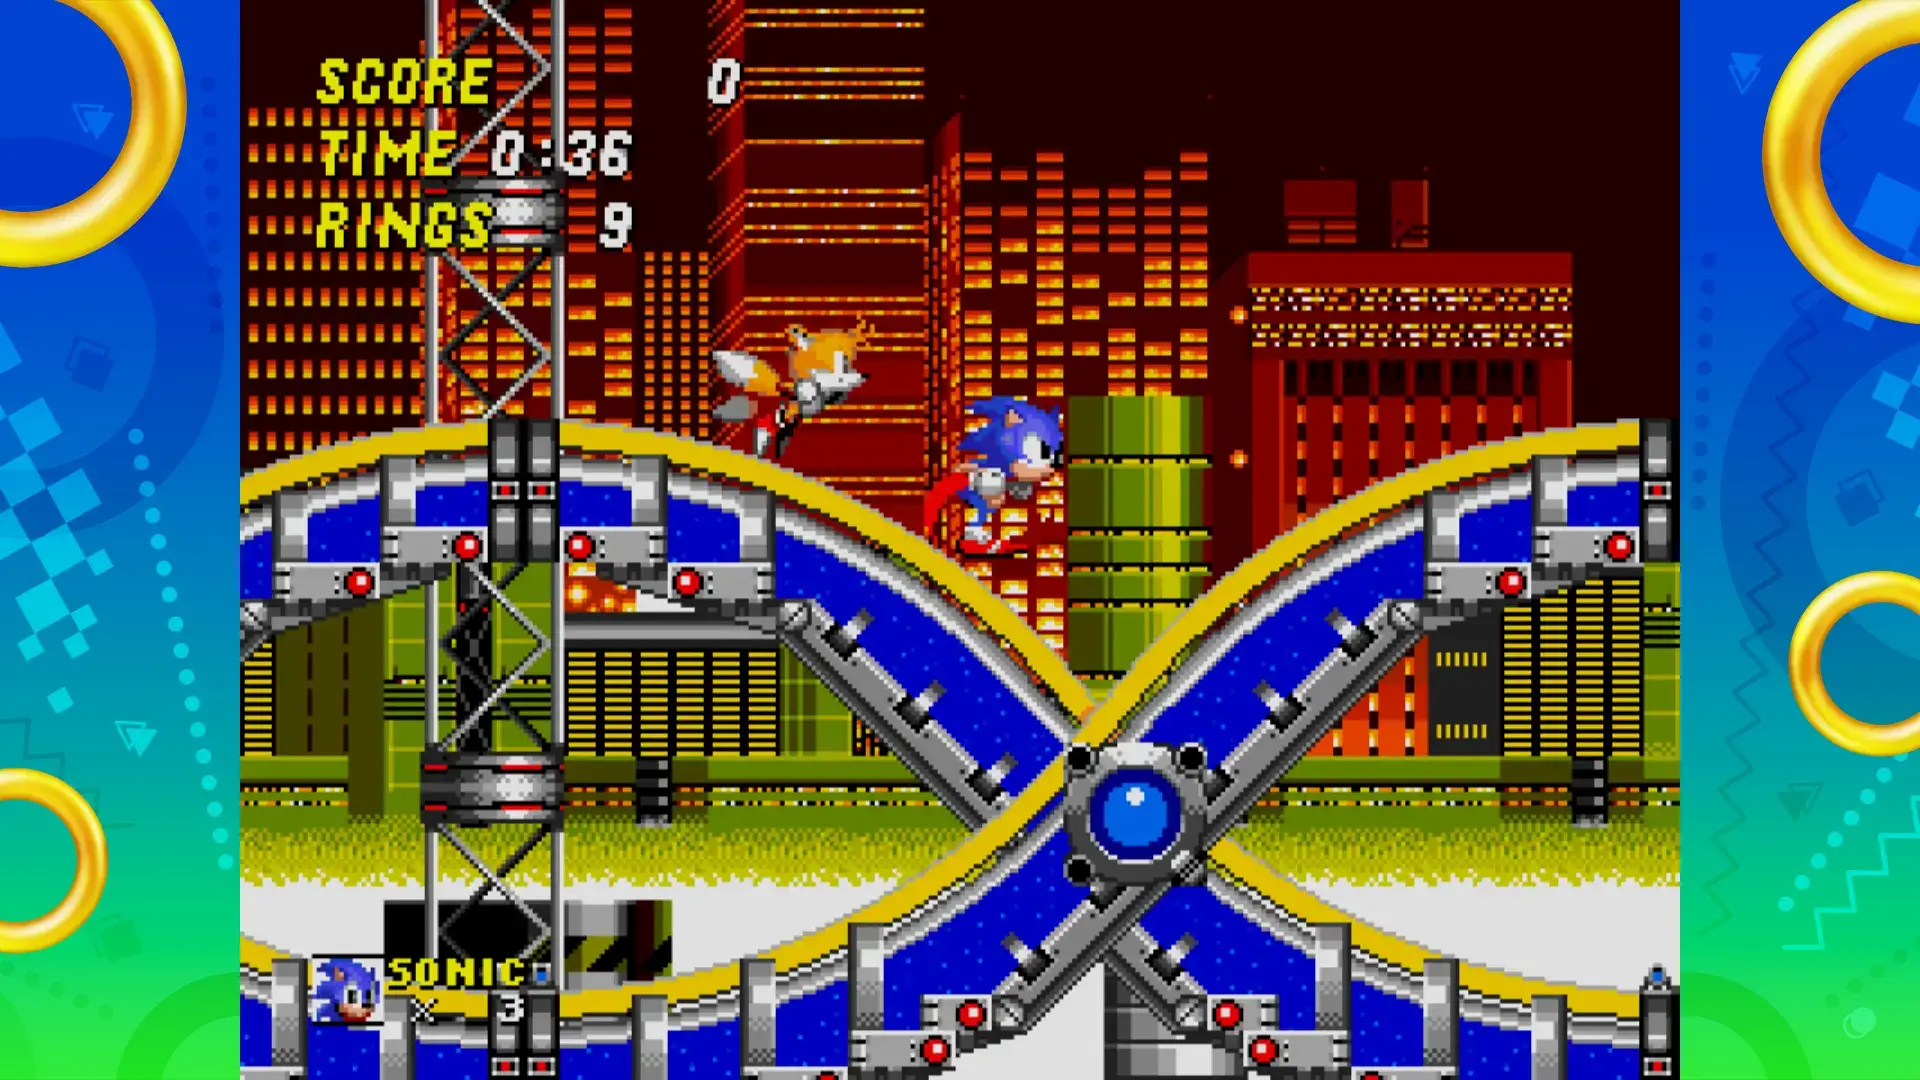 Nintendo Switch Online Adds Three More Sega Genesis Games, Including Sonic  The Hedgehog Spinball - Game Informer